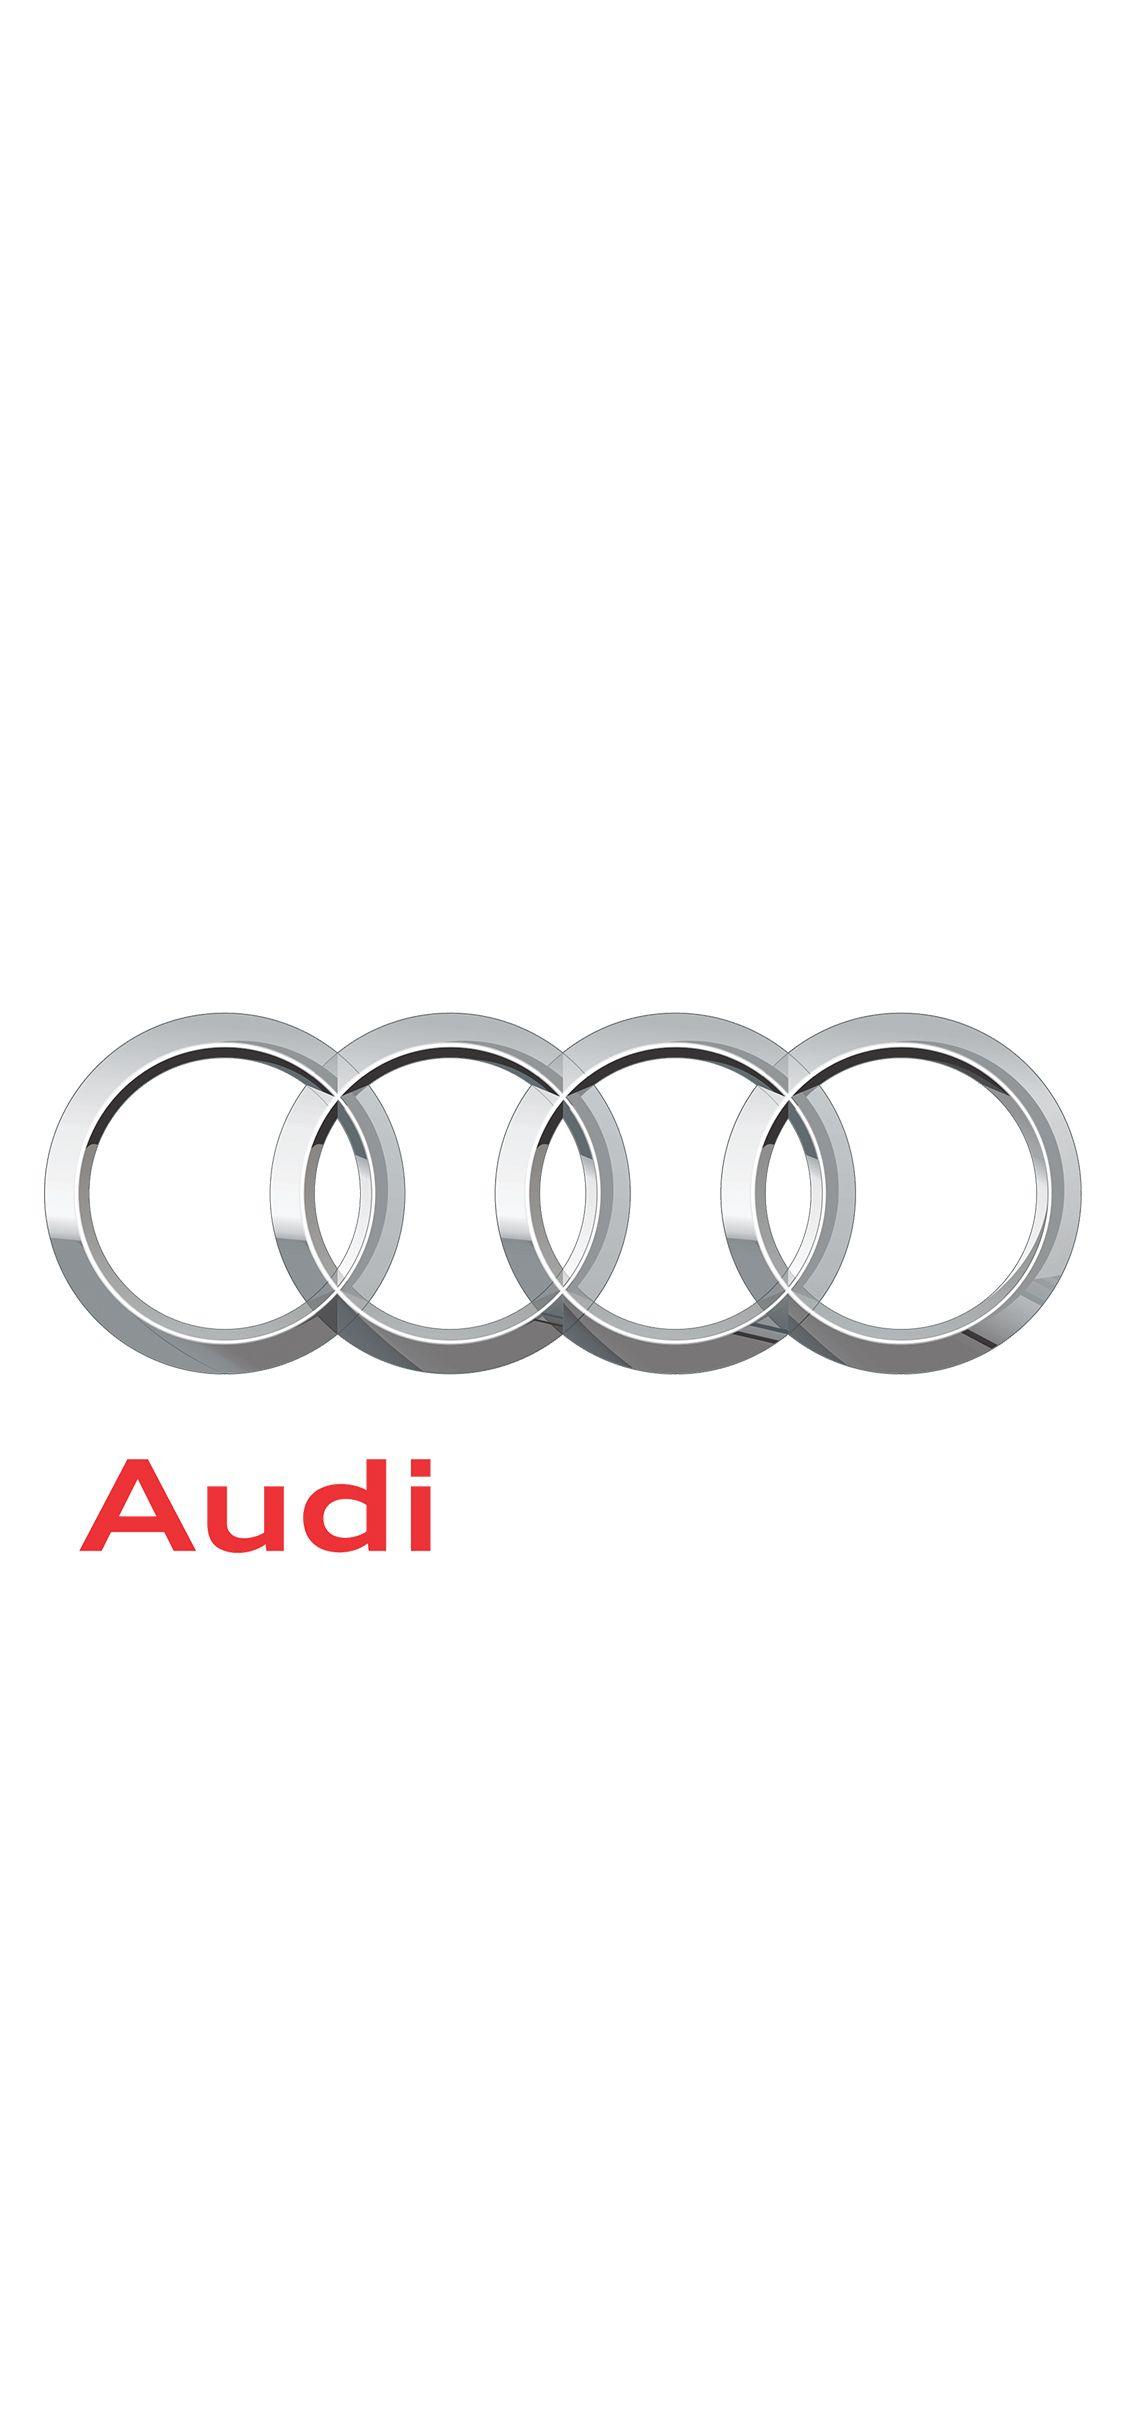 Audi Logo Iphone Wallpapers Top Free Audi Logo Iphone Backgrounds Wallpaperaccess